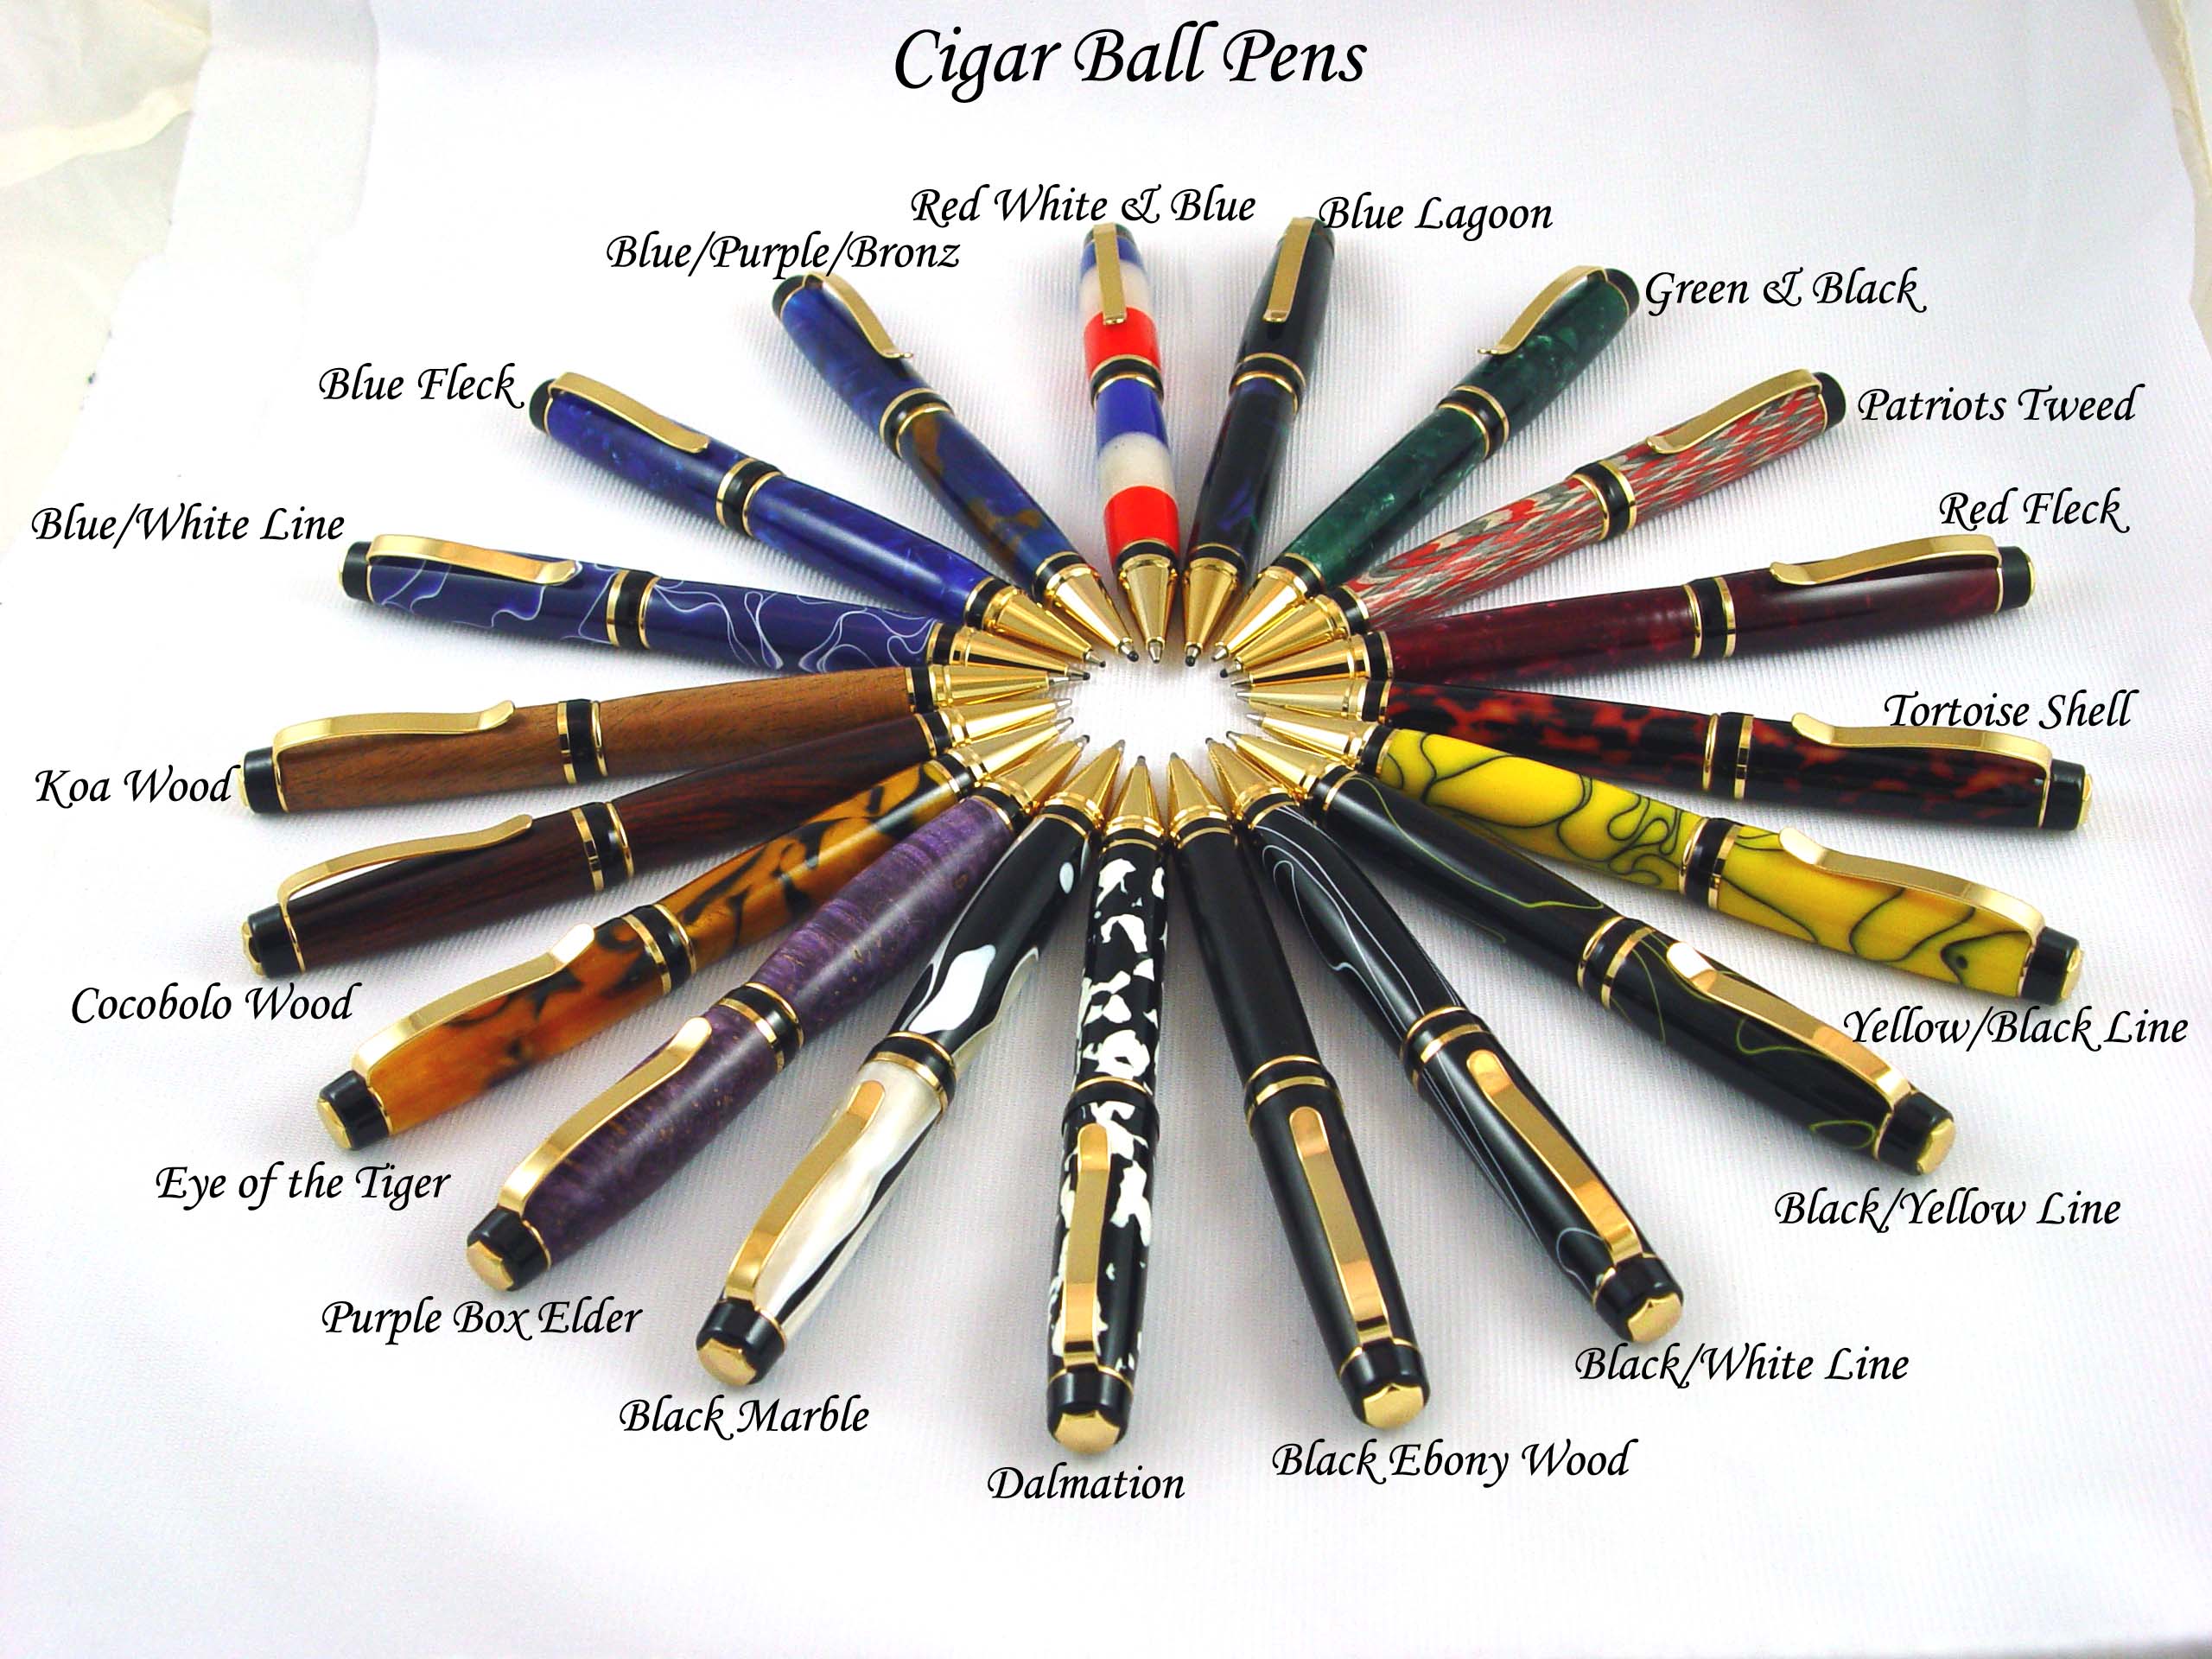 Cigar Ball pens